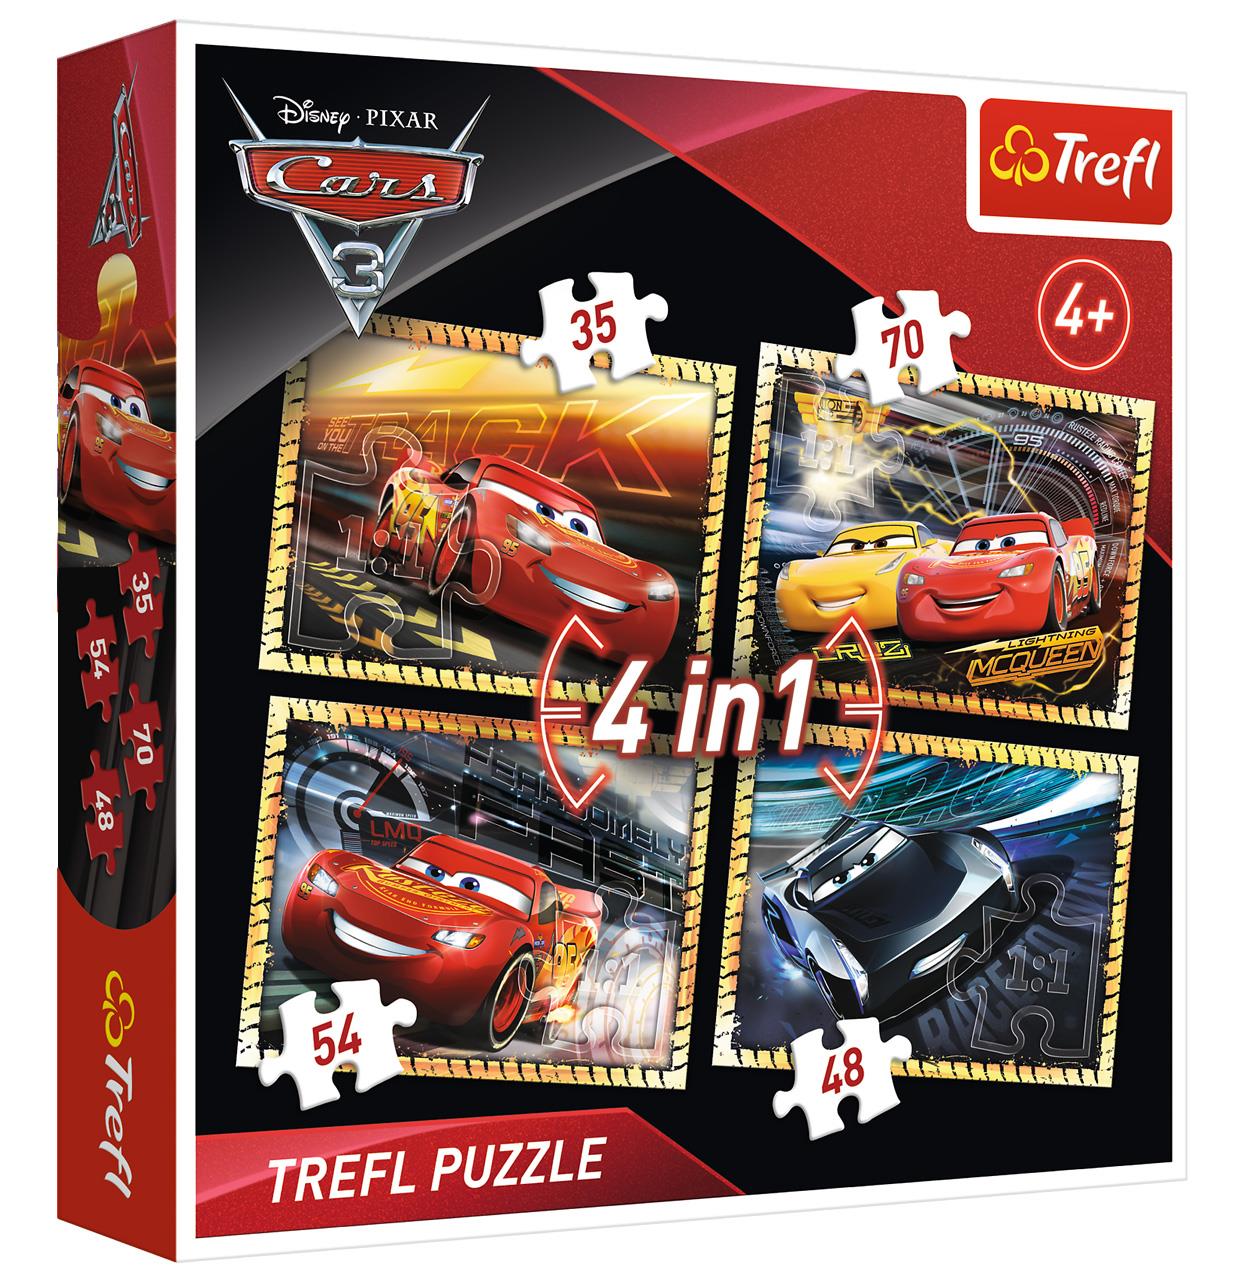 Trefl Çocuk Puzzle 34276 Cars 3 Ready To Race, Disney 35+48+54+70 Parça 4 in 1 Puzzle